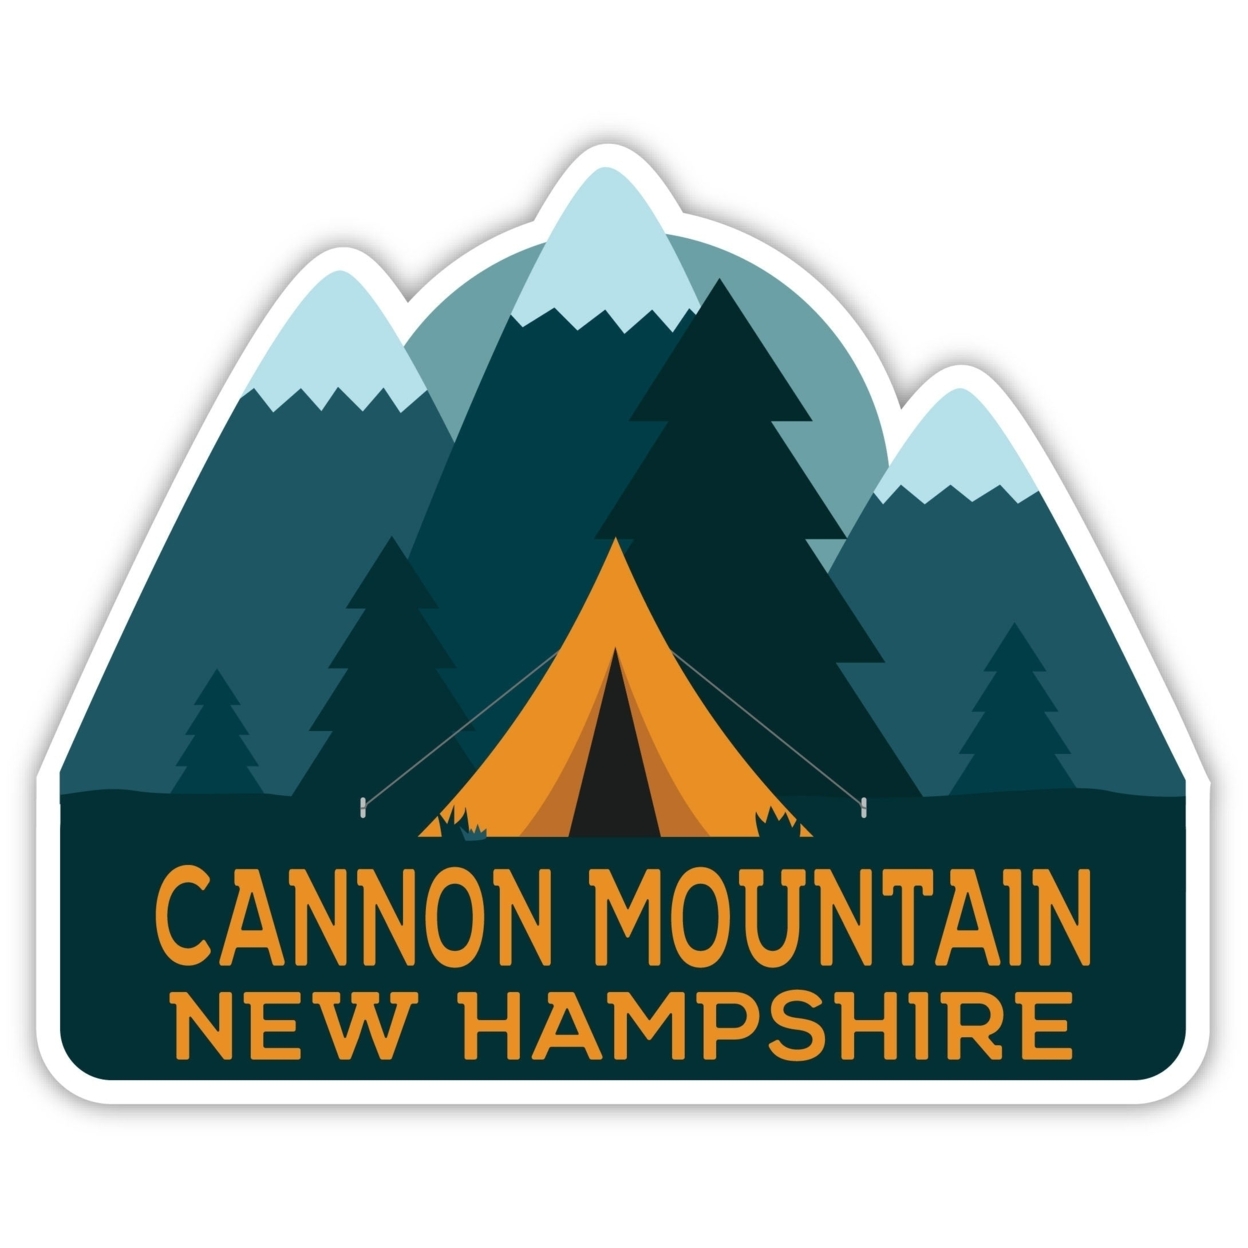 Cannon Mountain New Hampshire Souvenir Decorative Stickers (Choose Theme And Size) - Single Unit, 4-Inch, Tent